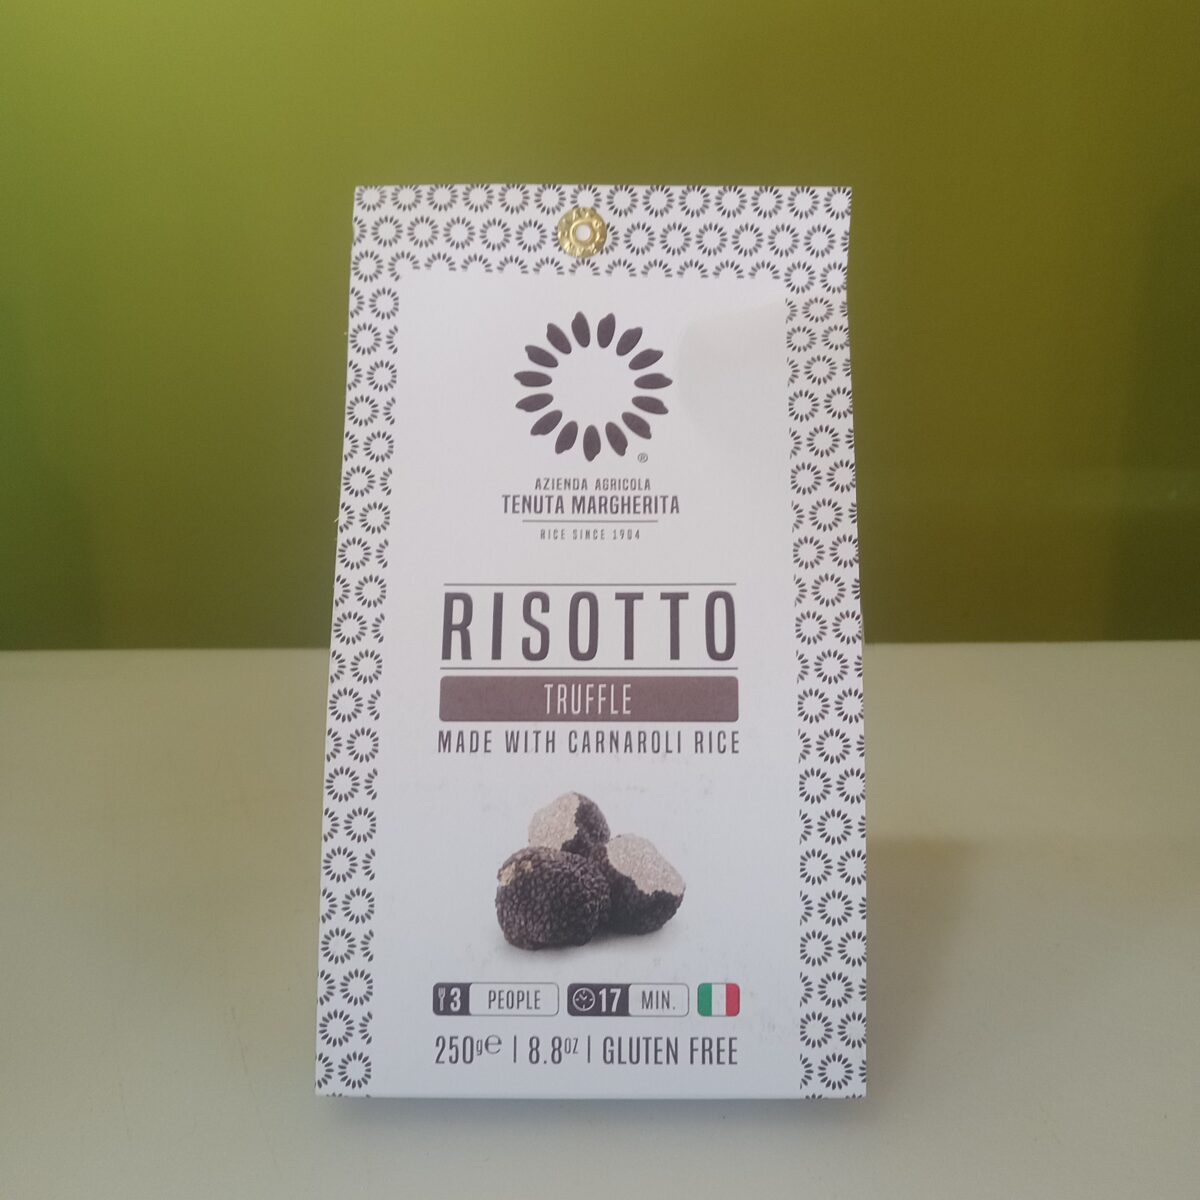 Risotto - Black Truffle -Italy